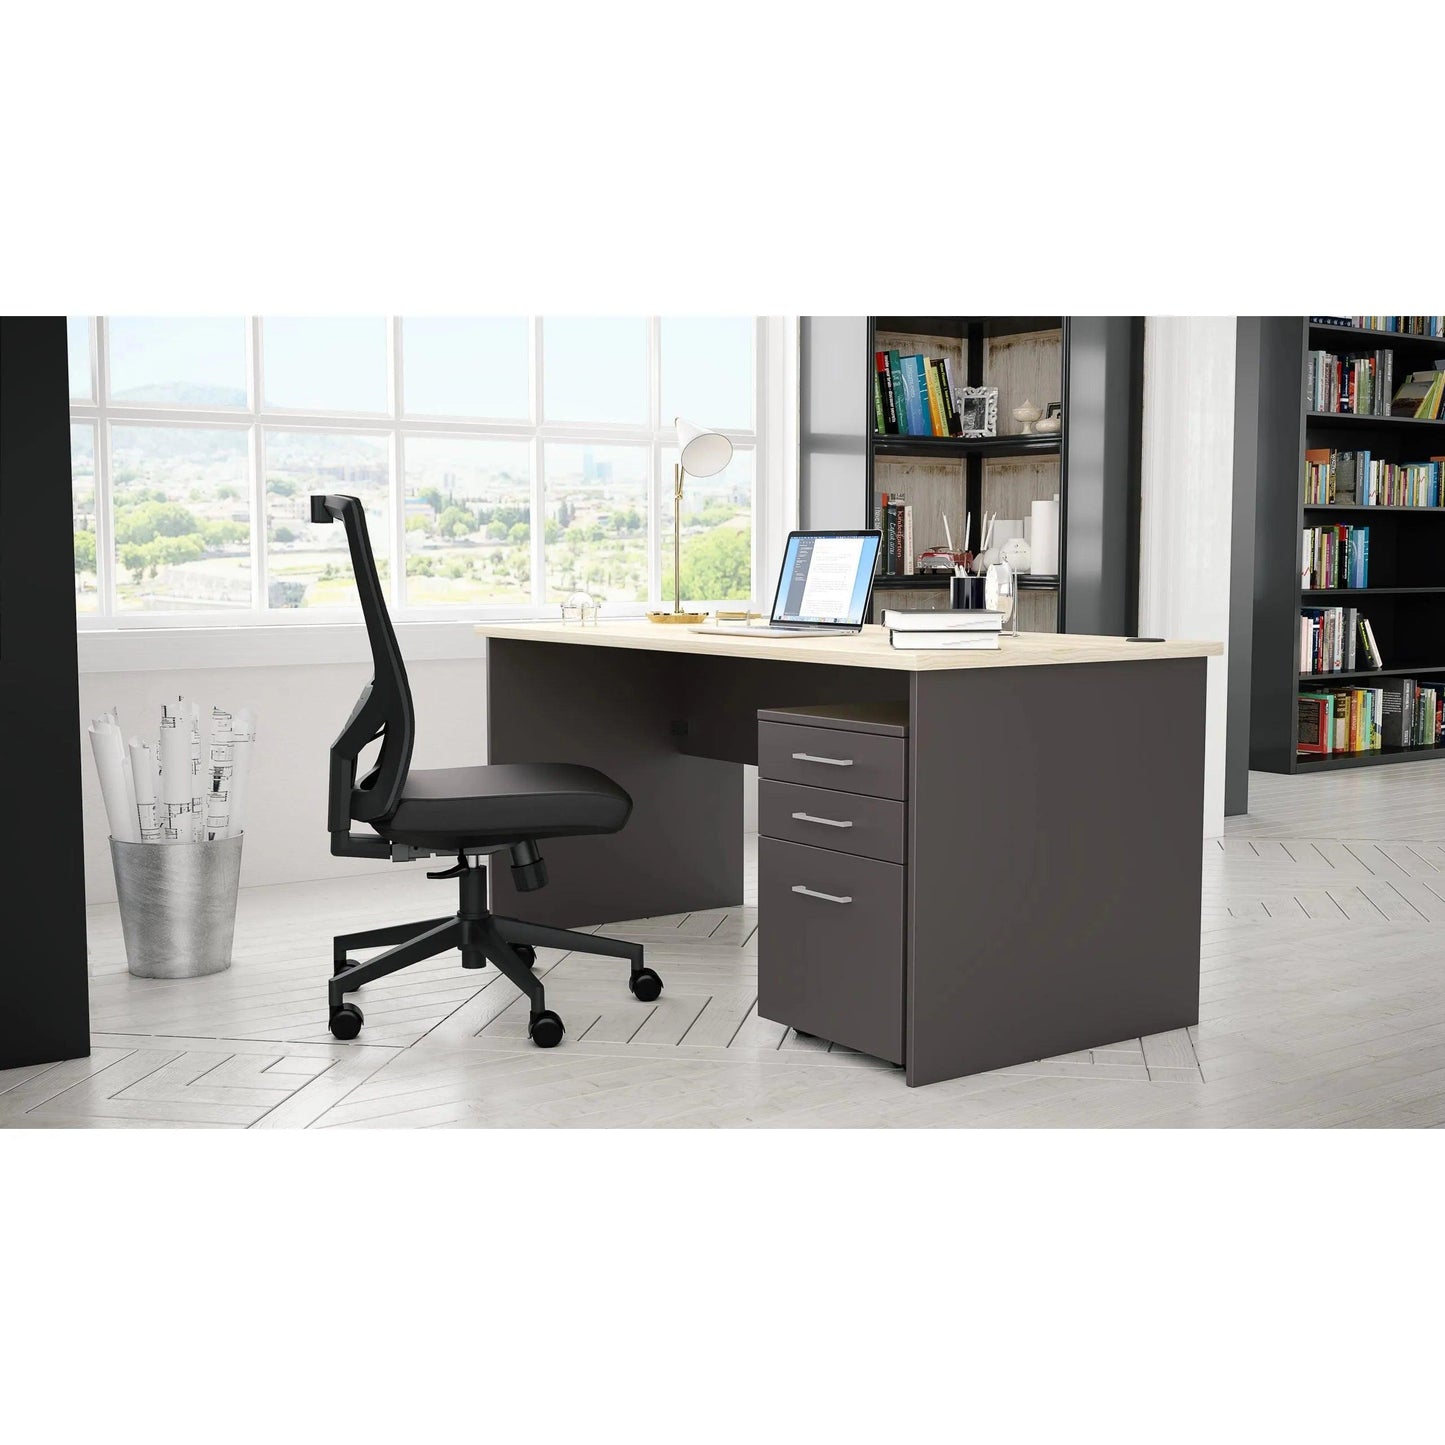 EkoSystem Straight Office Desk - Office Furniture Company 